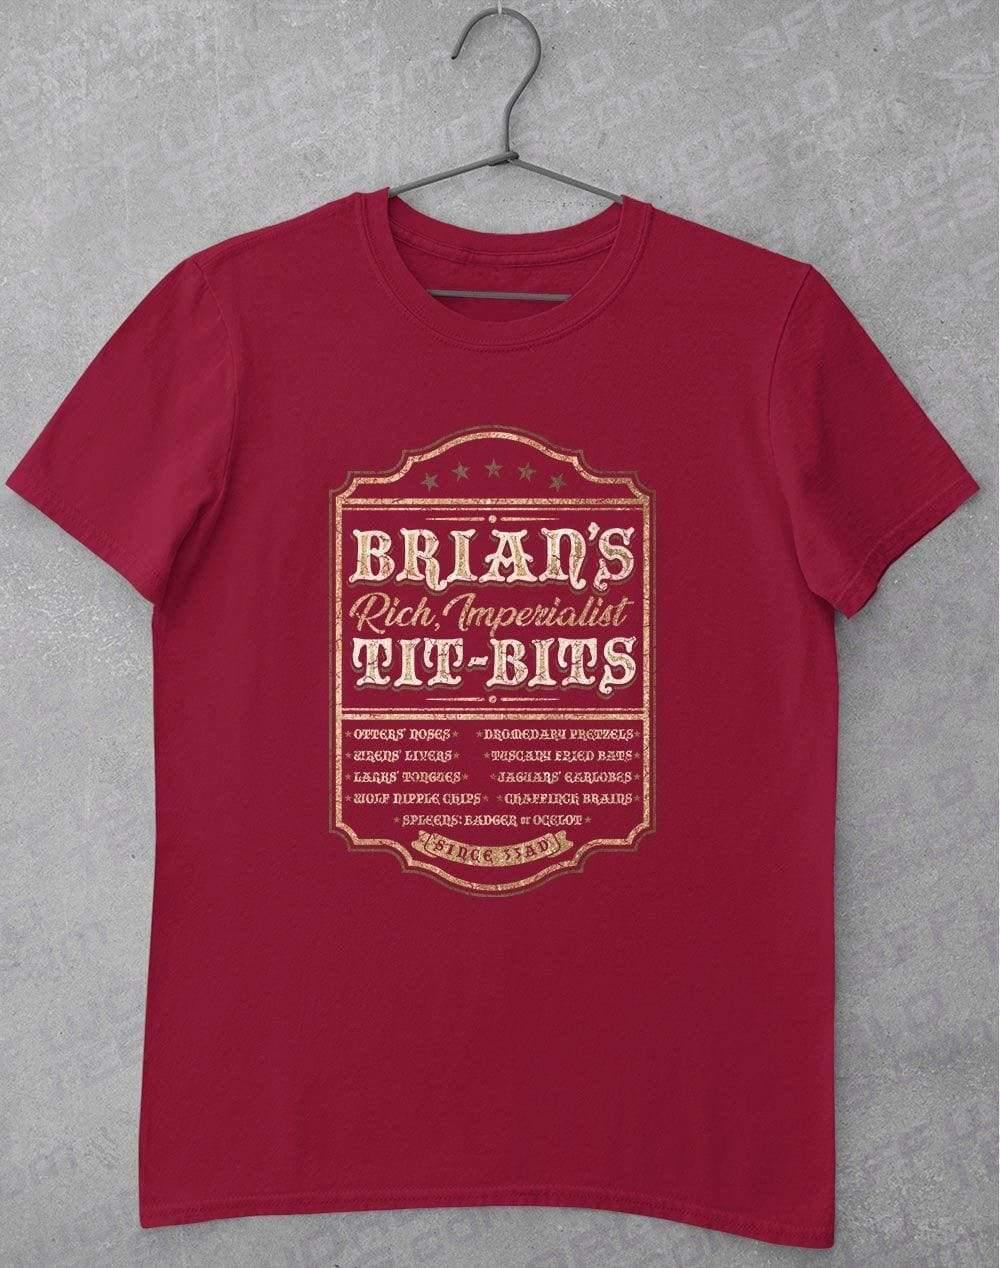 Brian's Tit-Bits T-Shirt S / Cardinal Red  - Off World Tees